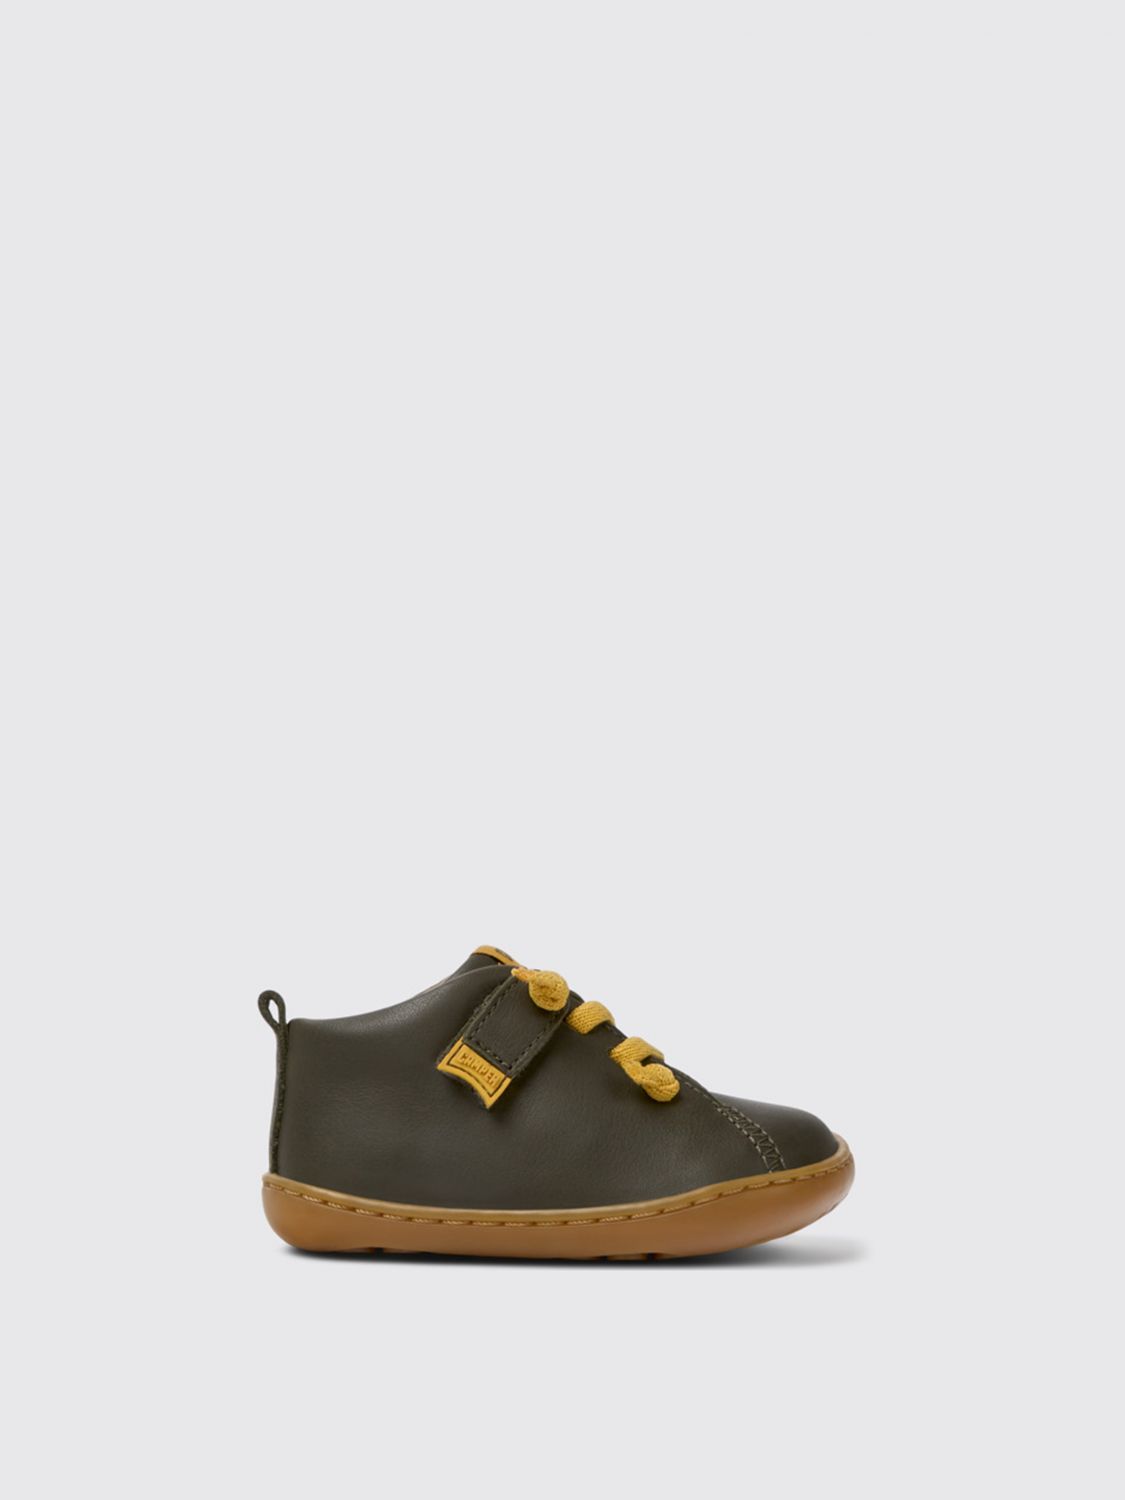 financieel ontrouw Halve cirkel CAMPER: shoes for boys - Green | Camper shoes 80153-092 PEU online on  GIGLIO.COM